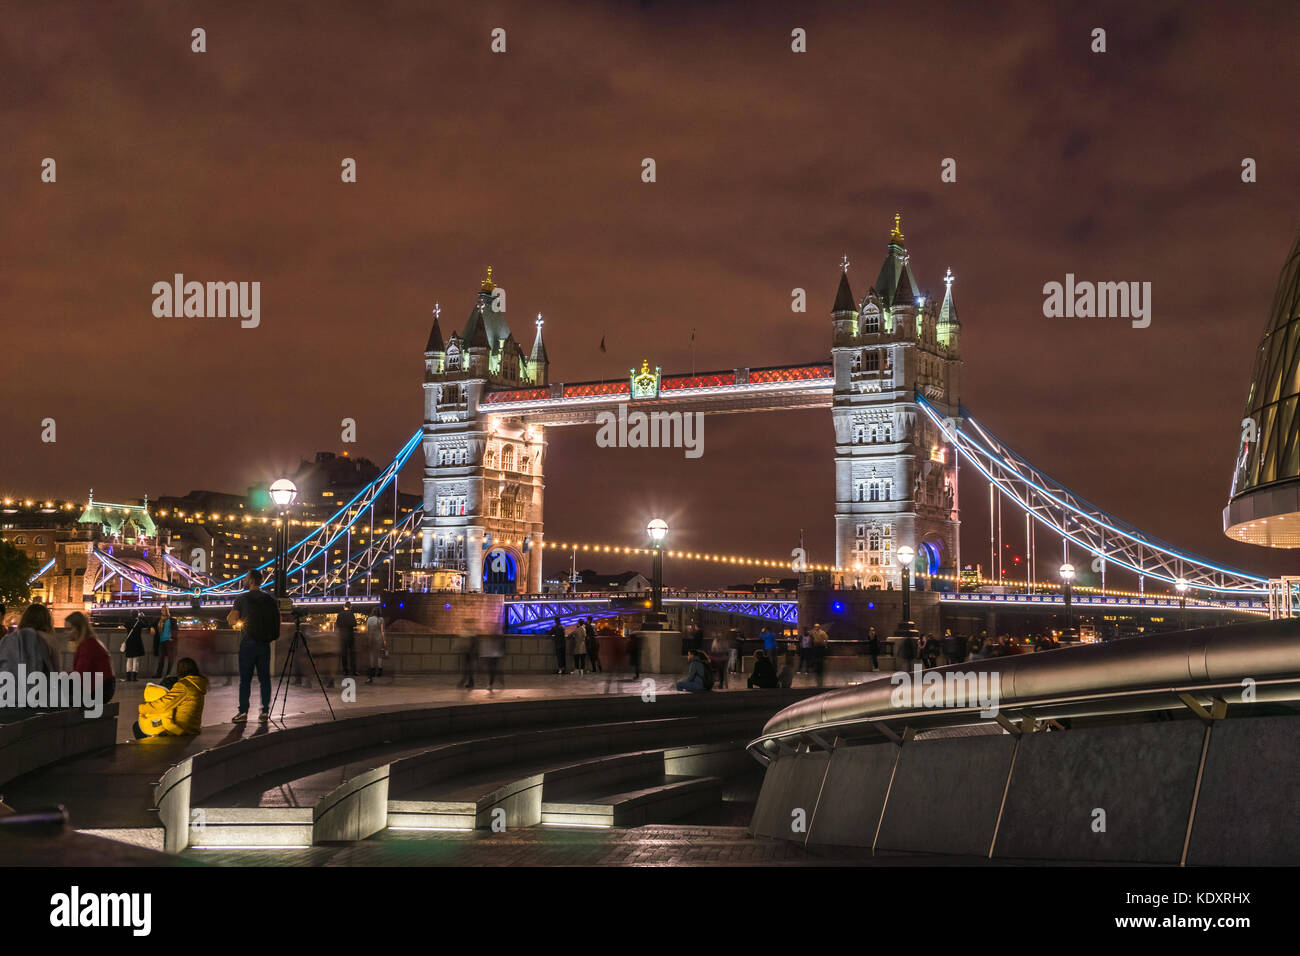 The illuminated Tower Bridge at night, City of London, England, UK Stock Photo